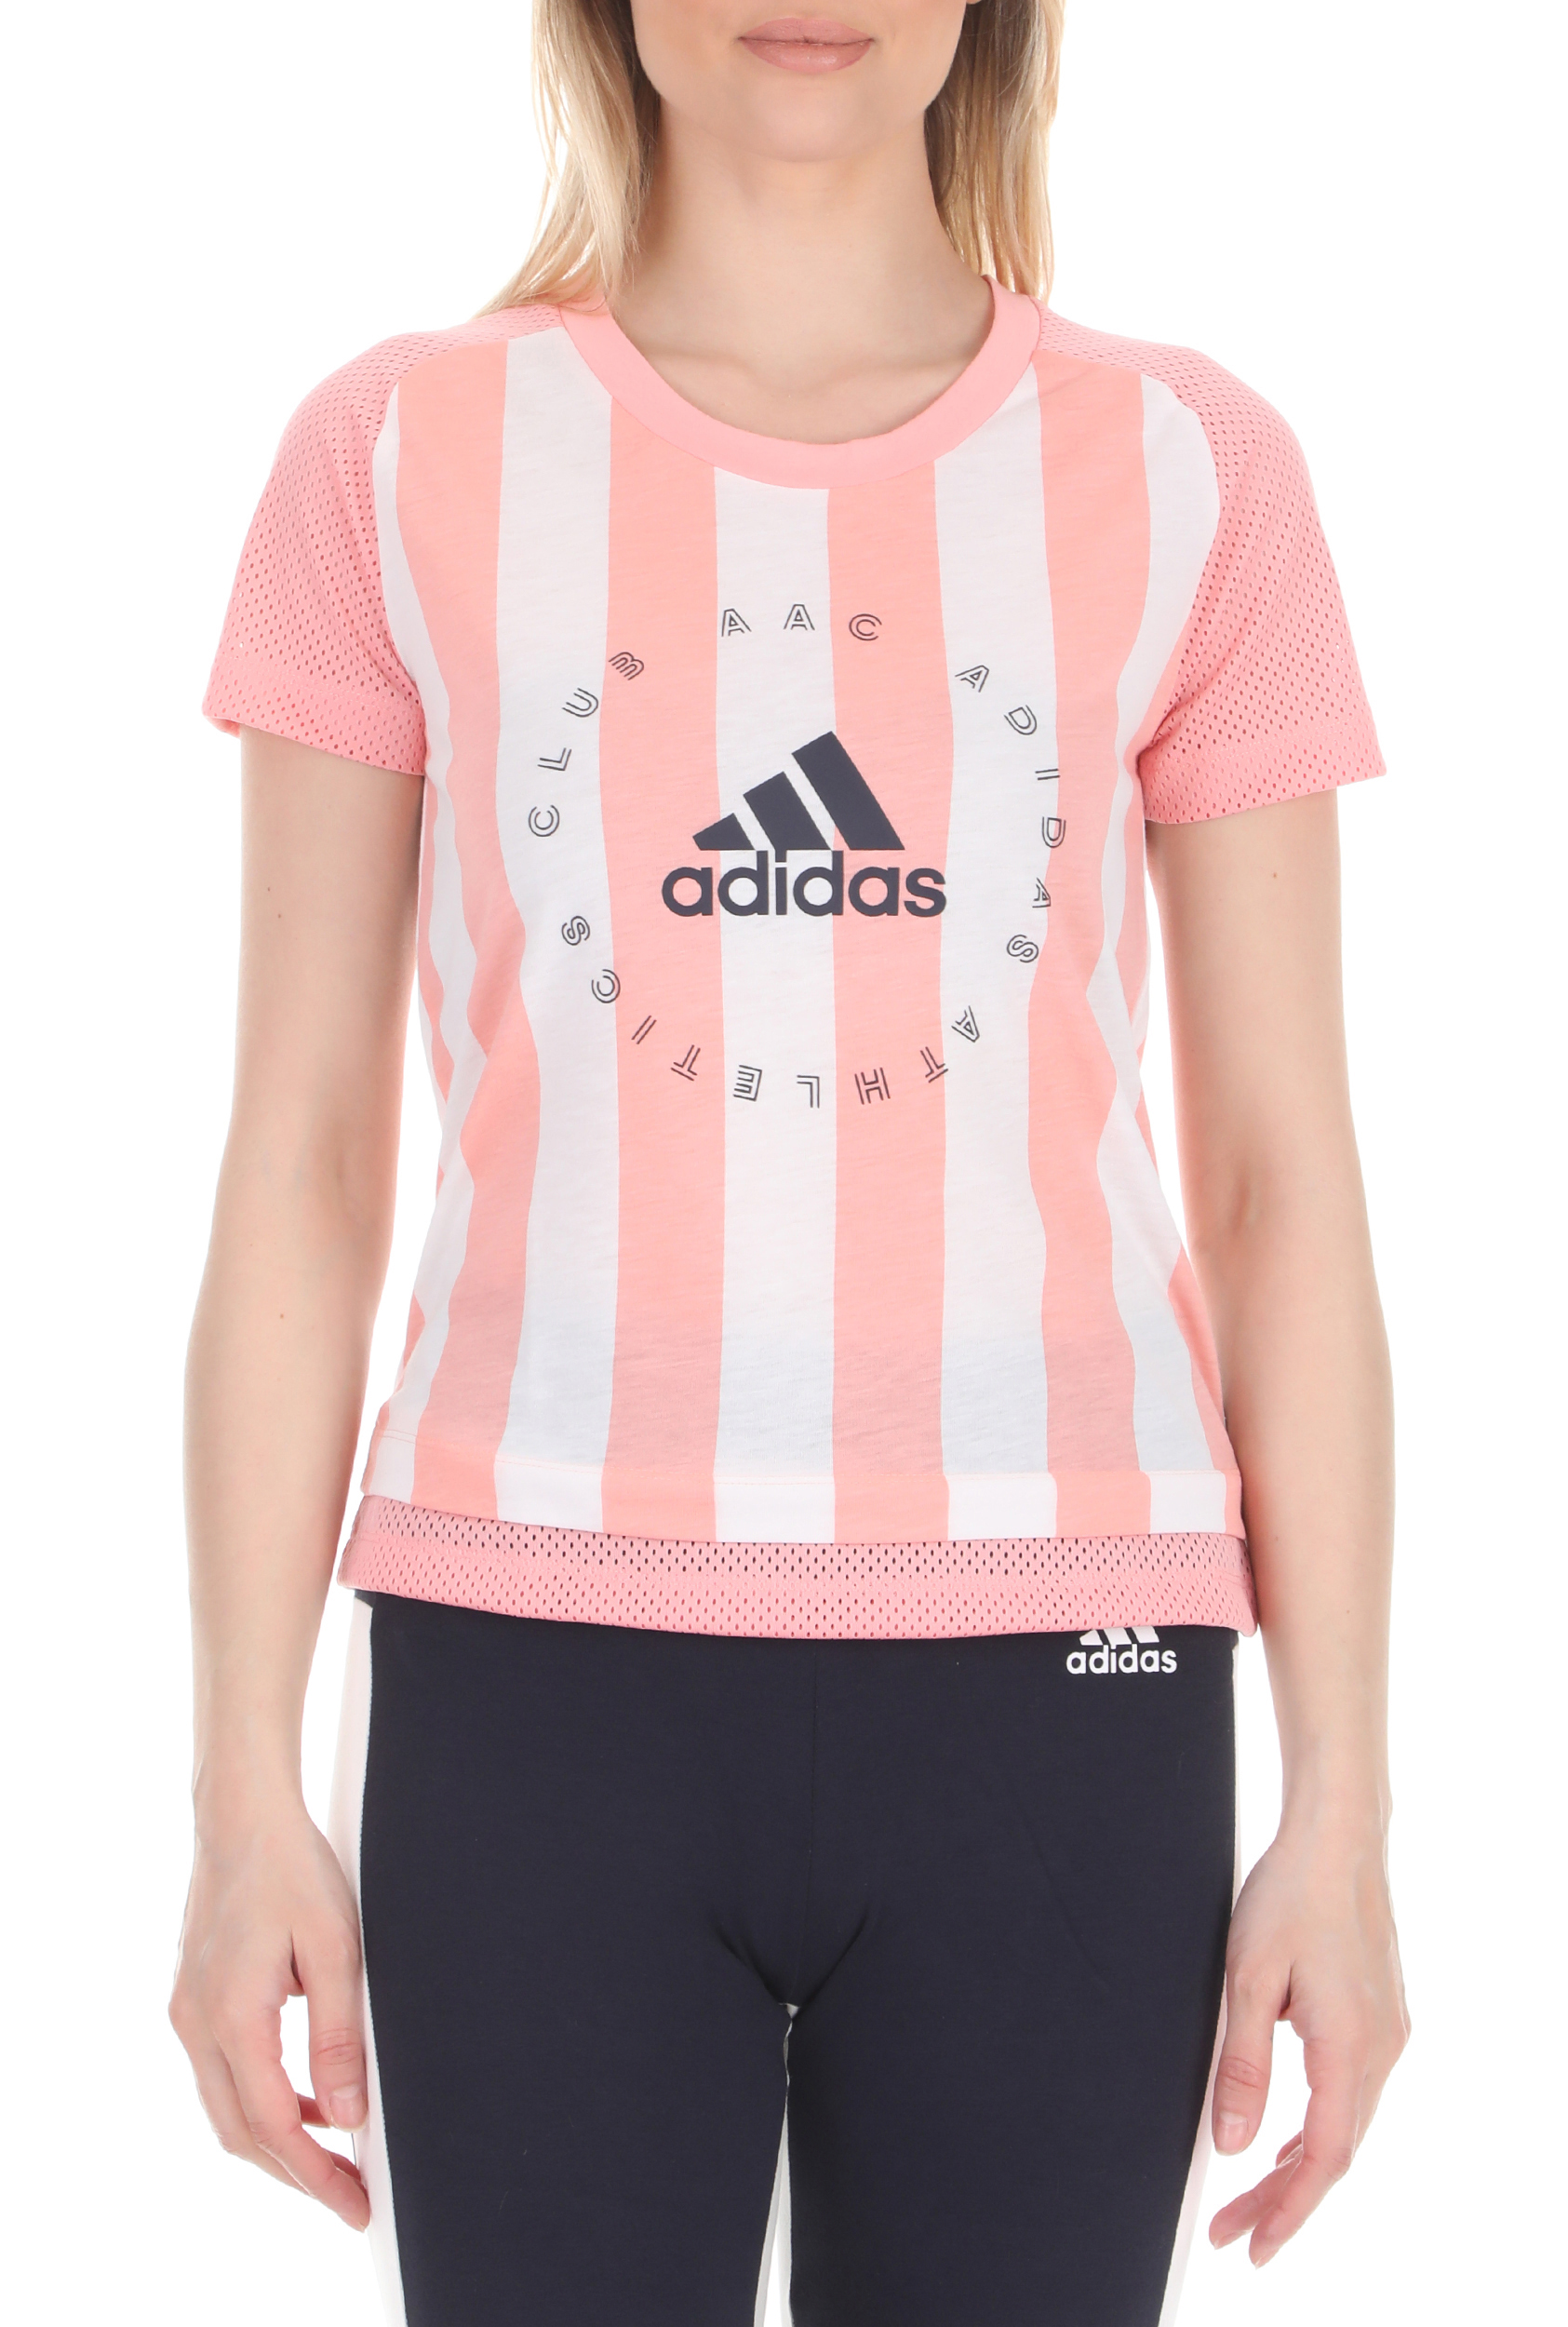 ADIDAS ORIGINALS adidas Performance - Γυναικείο t-shirt adidas Performance W AAC Tee ροζ λευκή